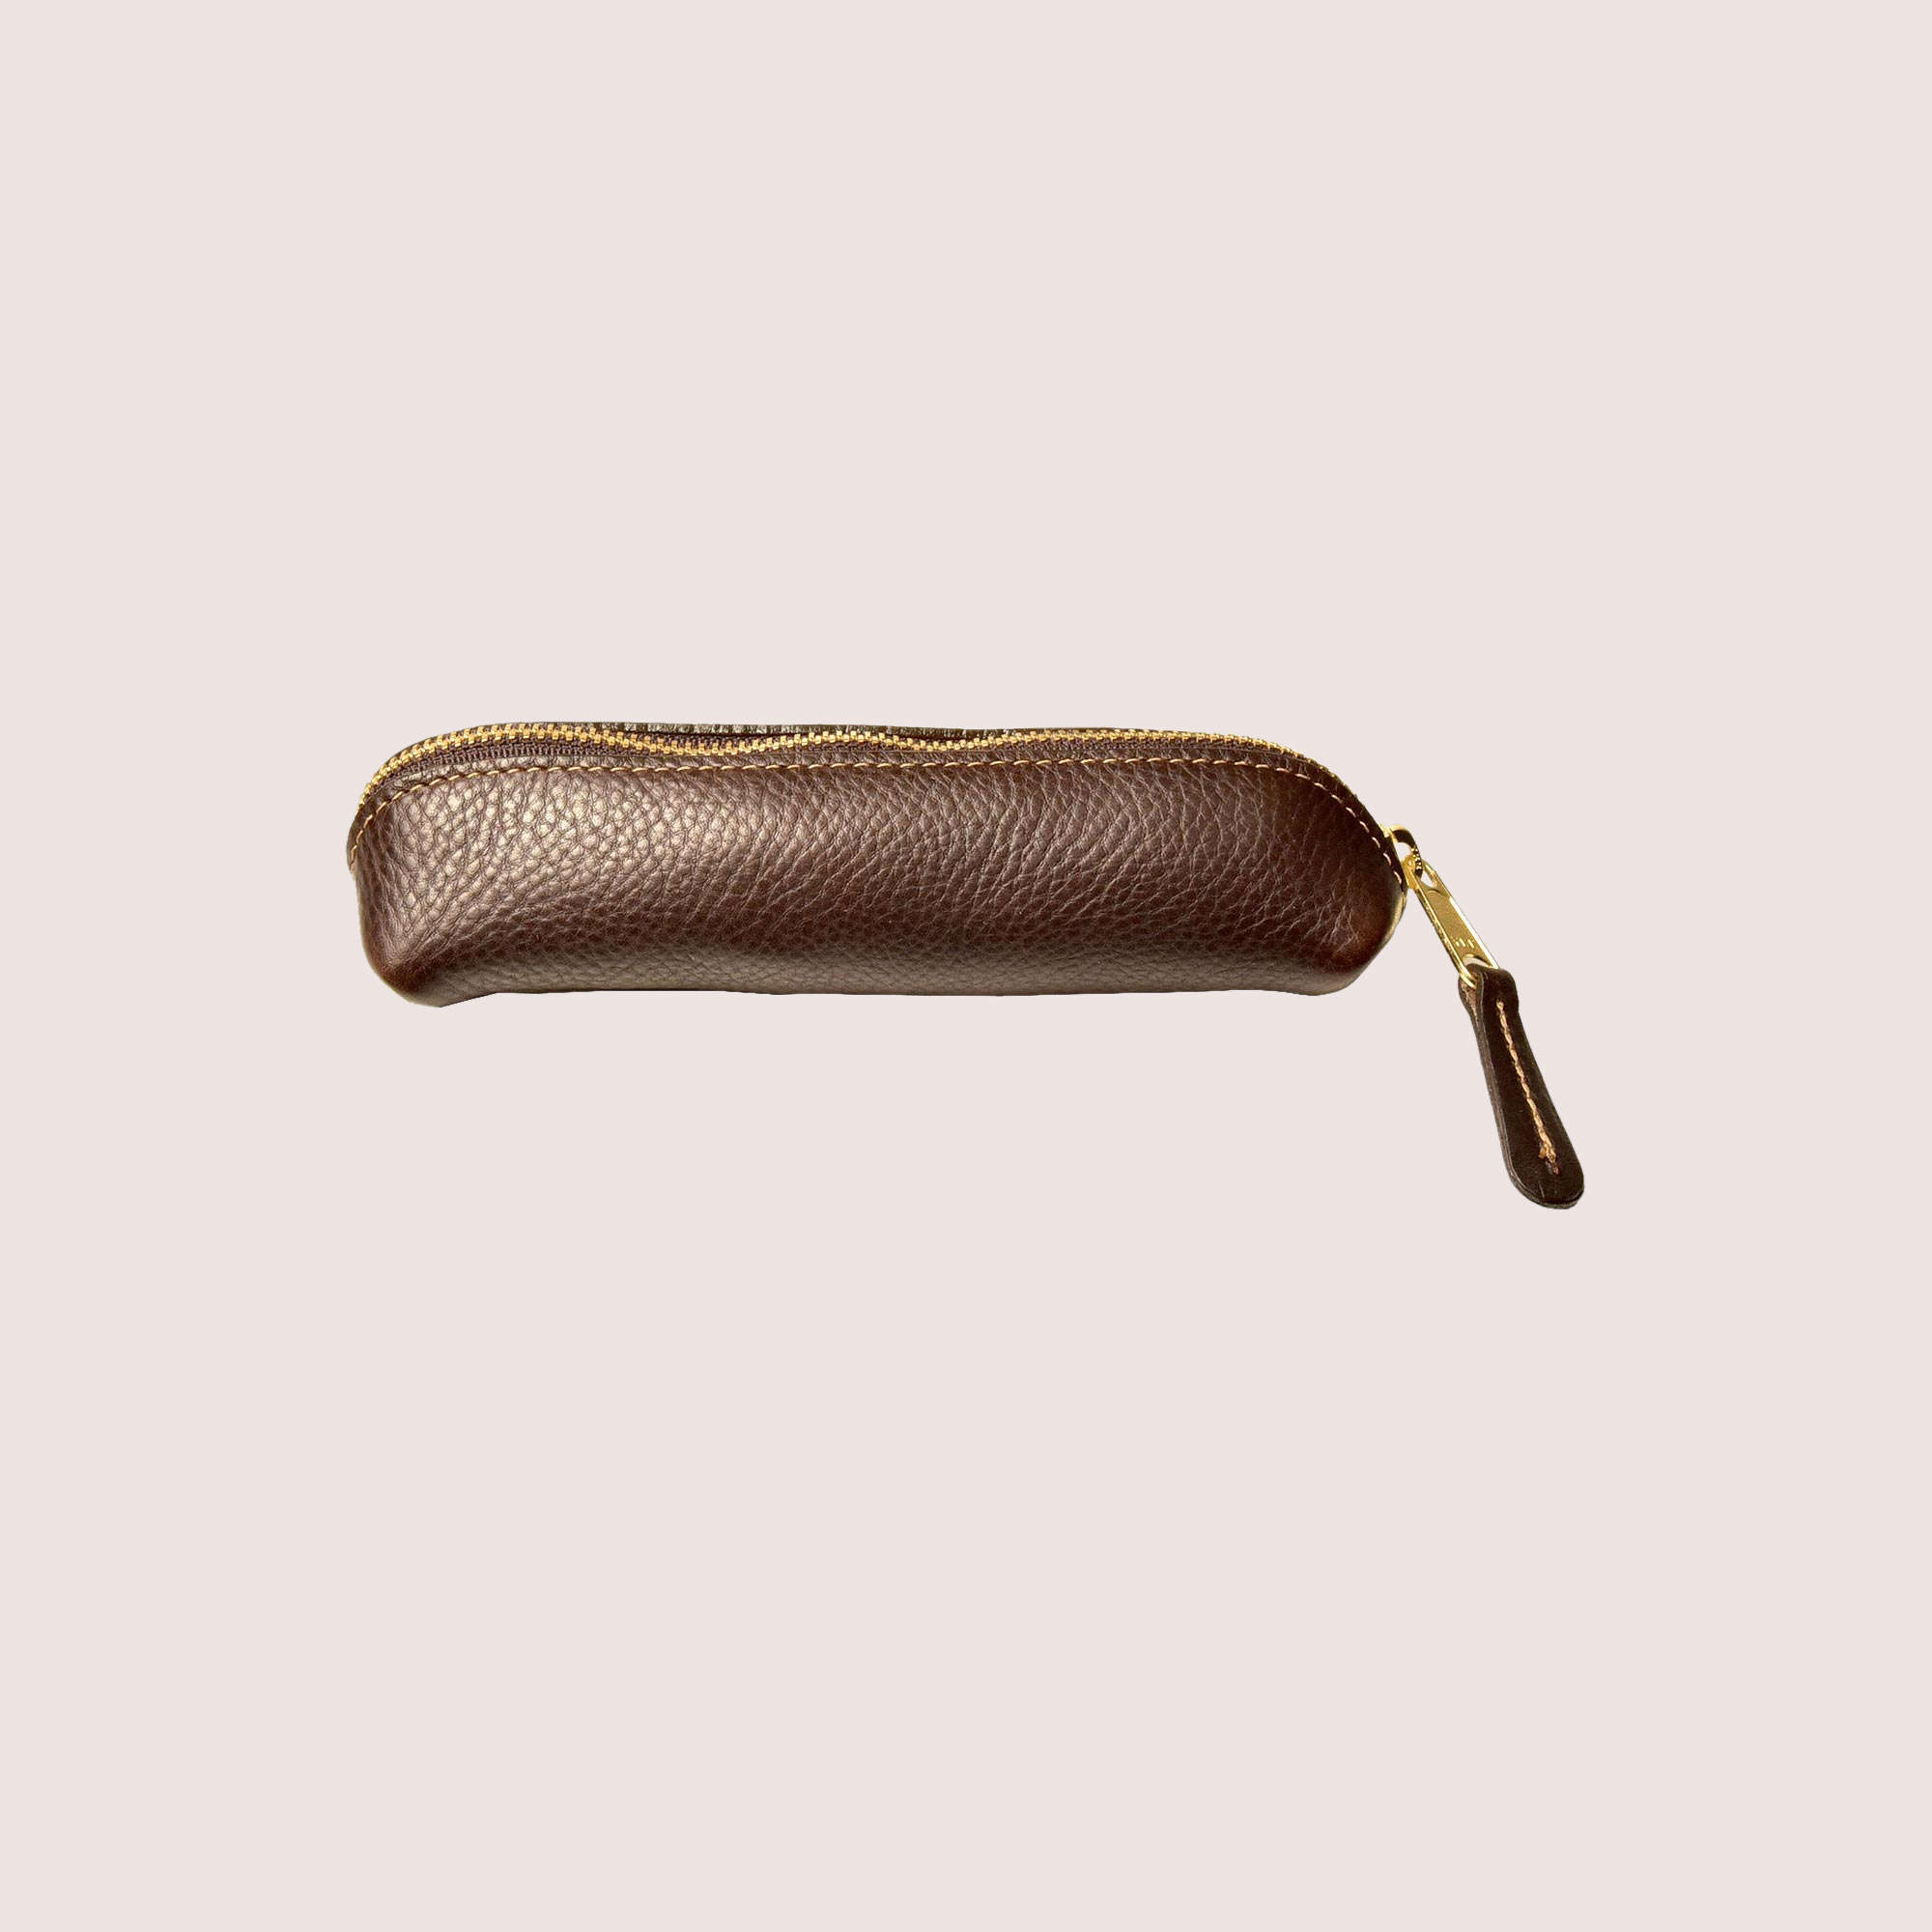 Pen or Multi Purpose Leather Pouch